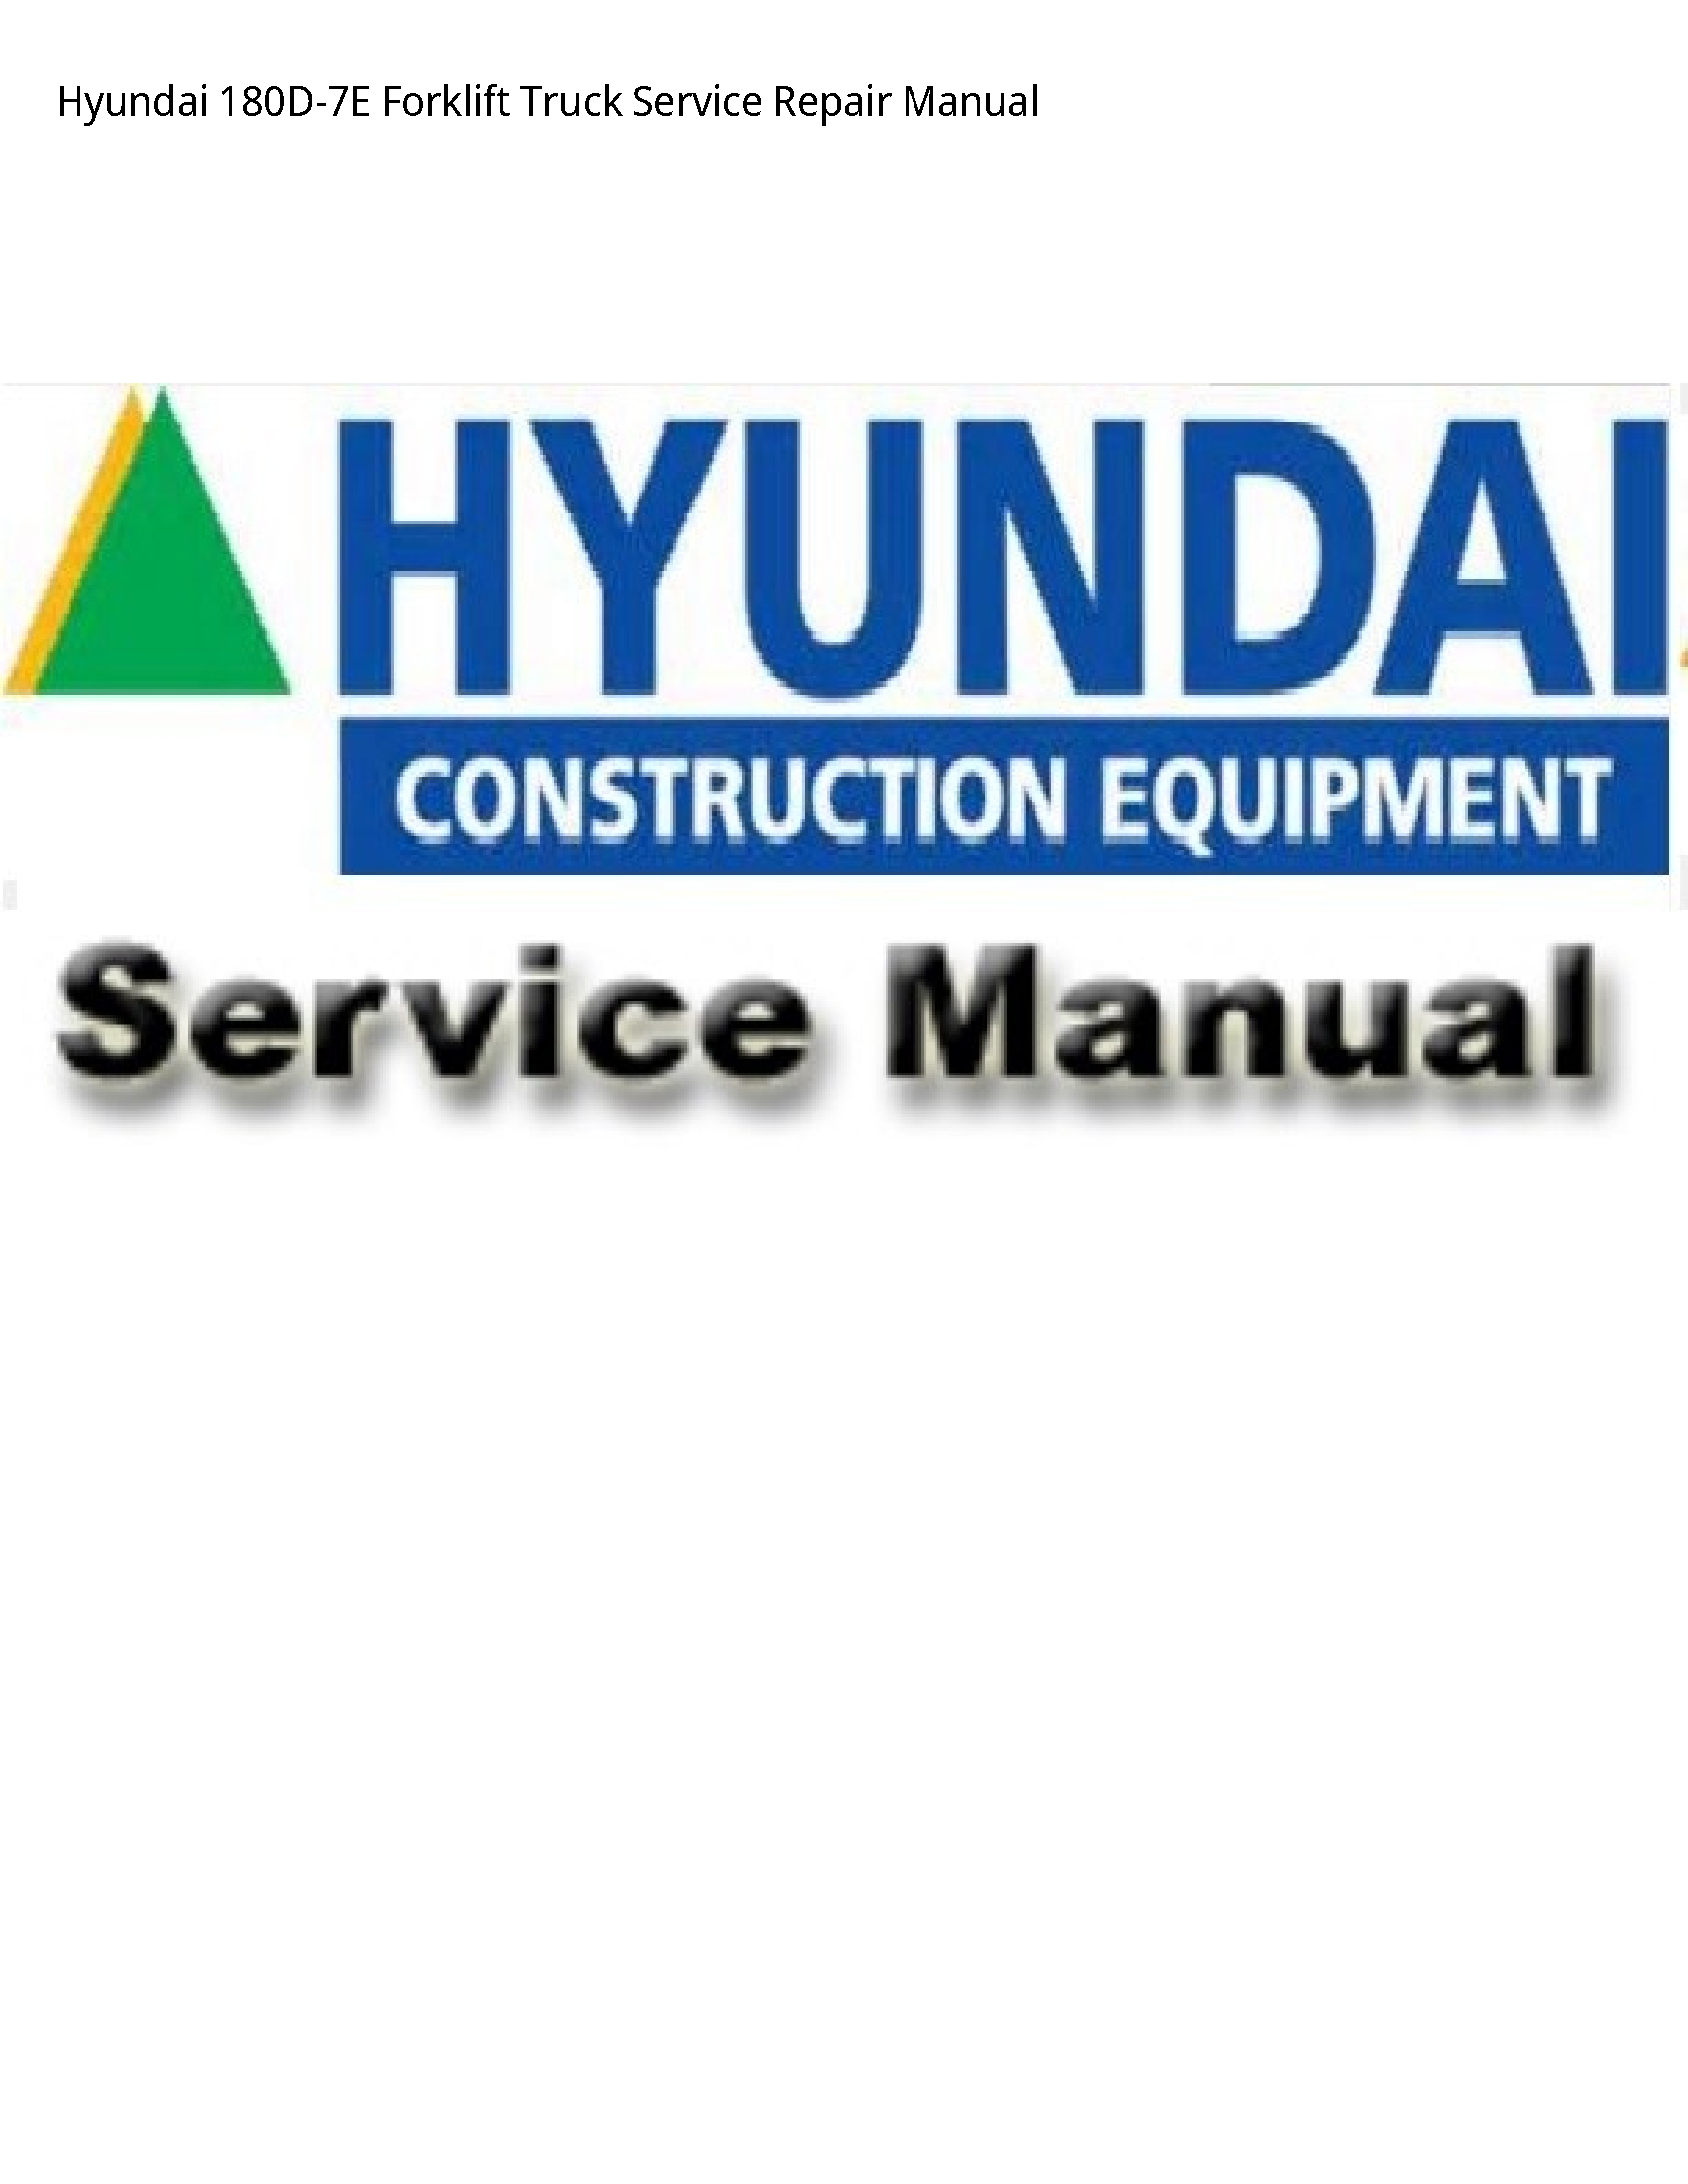 Hyundai 180D-7E Forklift Truck manual